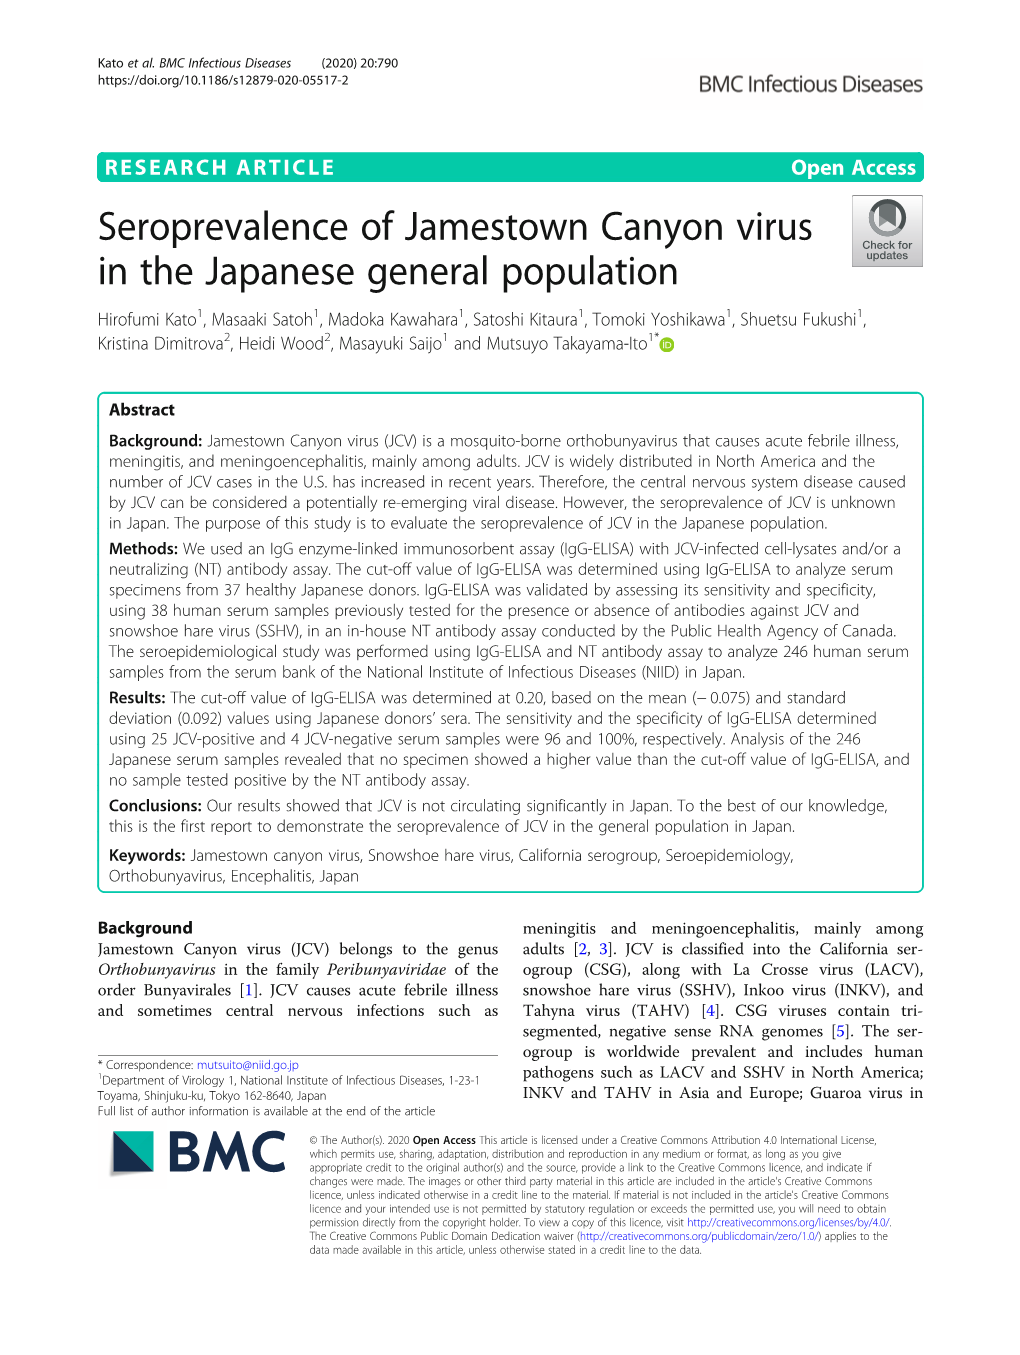 Seroprevalence of Jamestown Canyon Virus in the Japanese